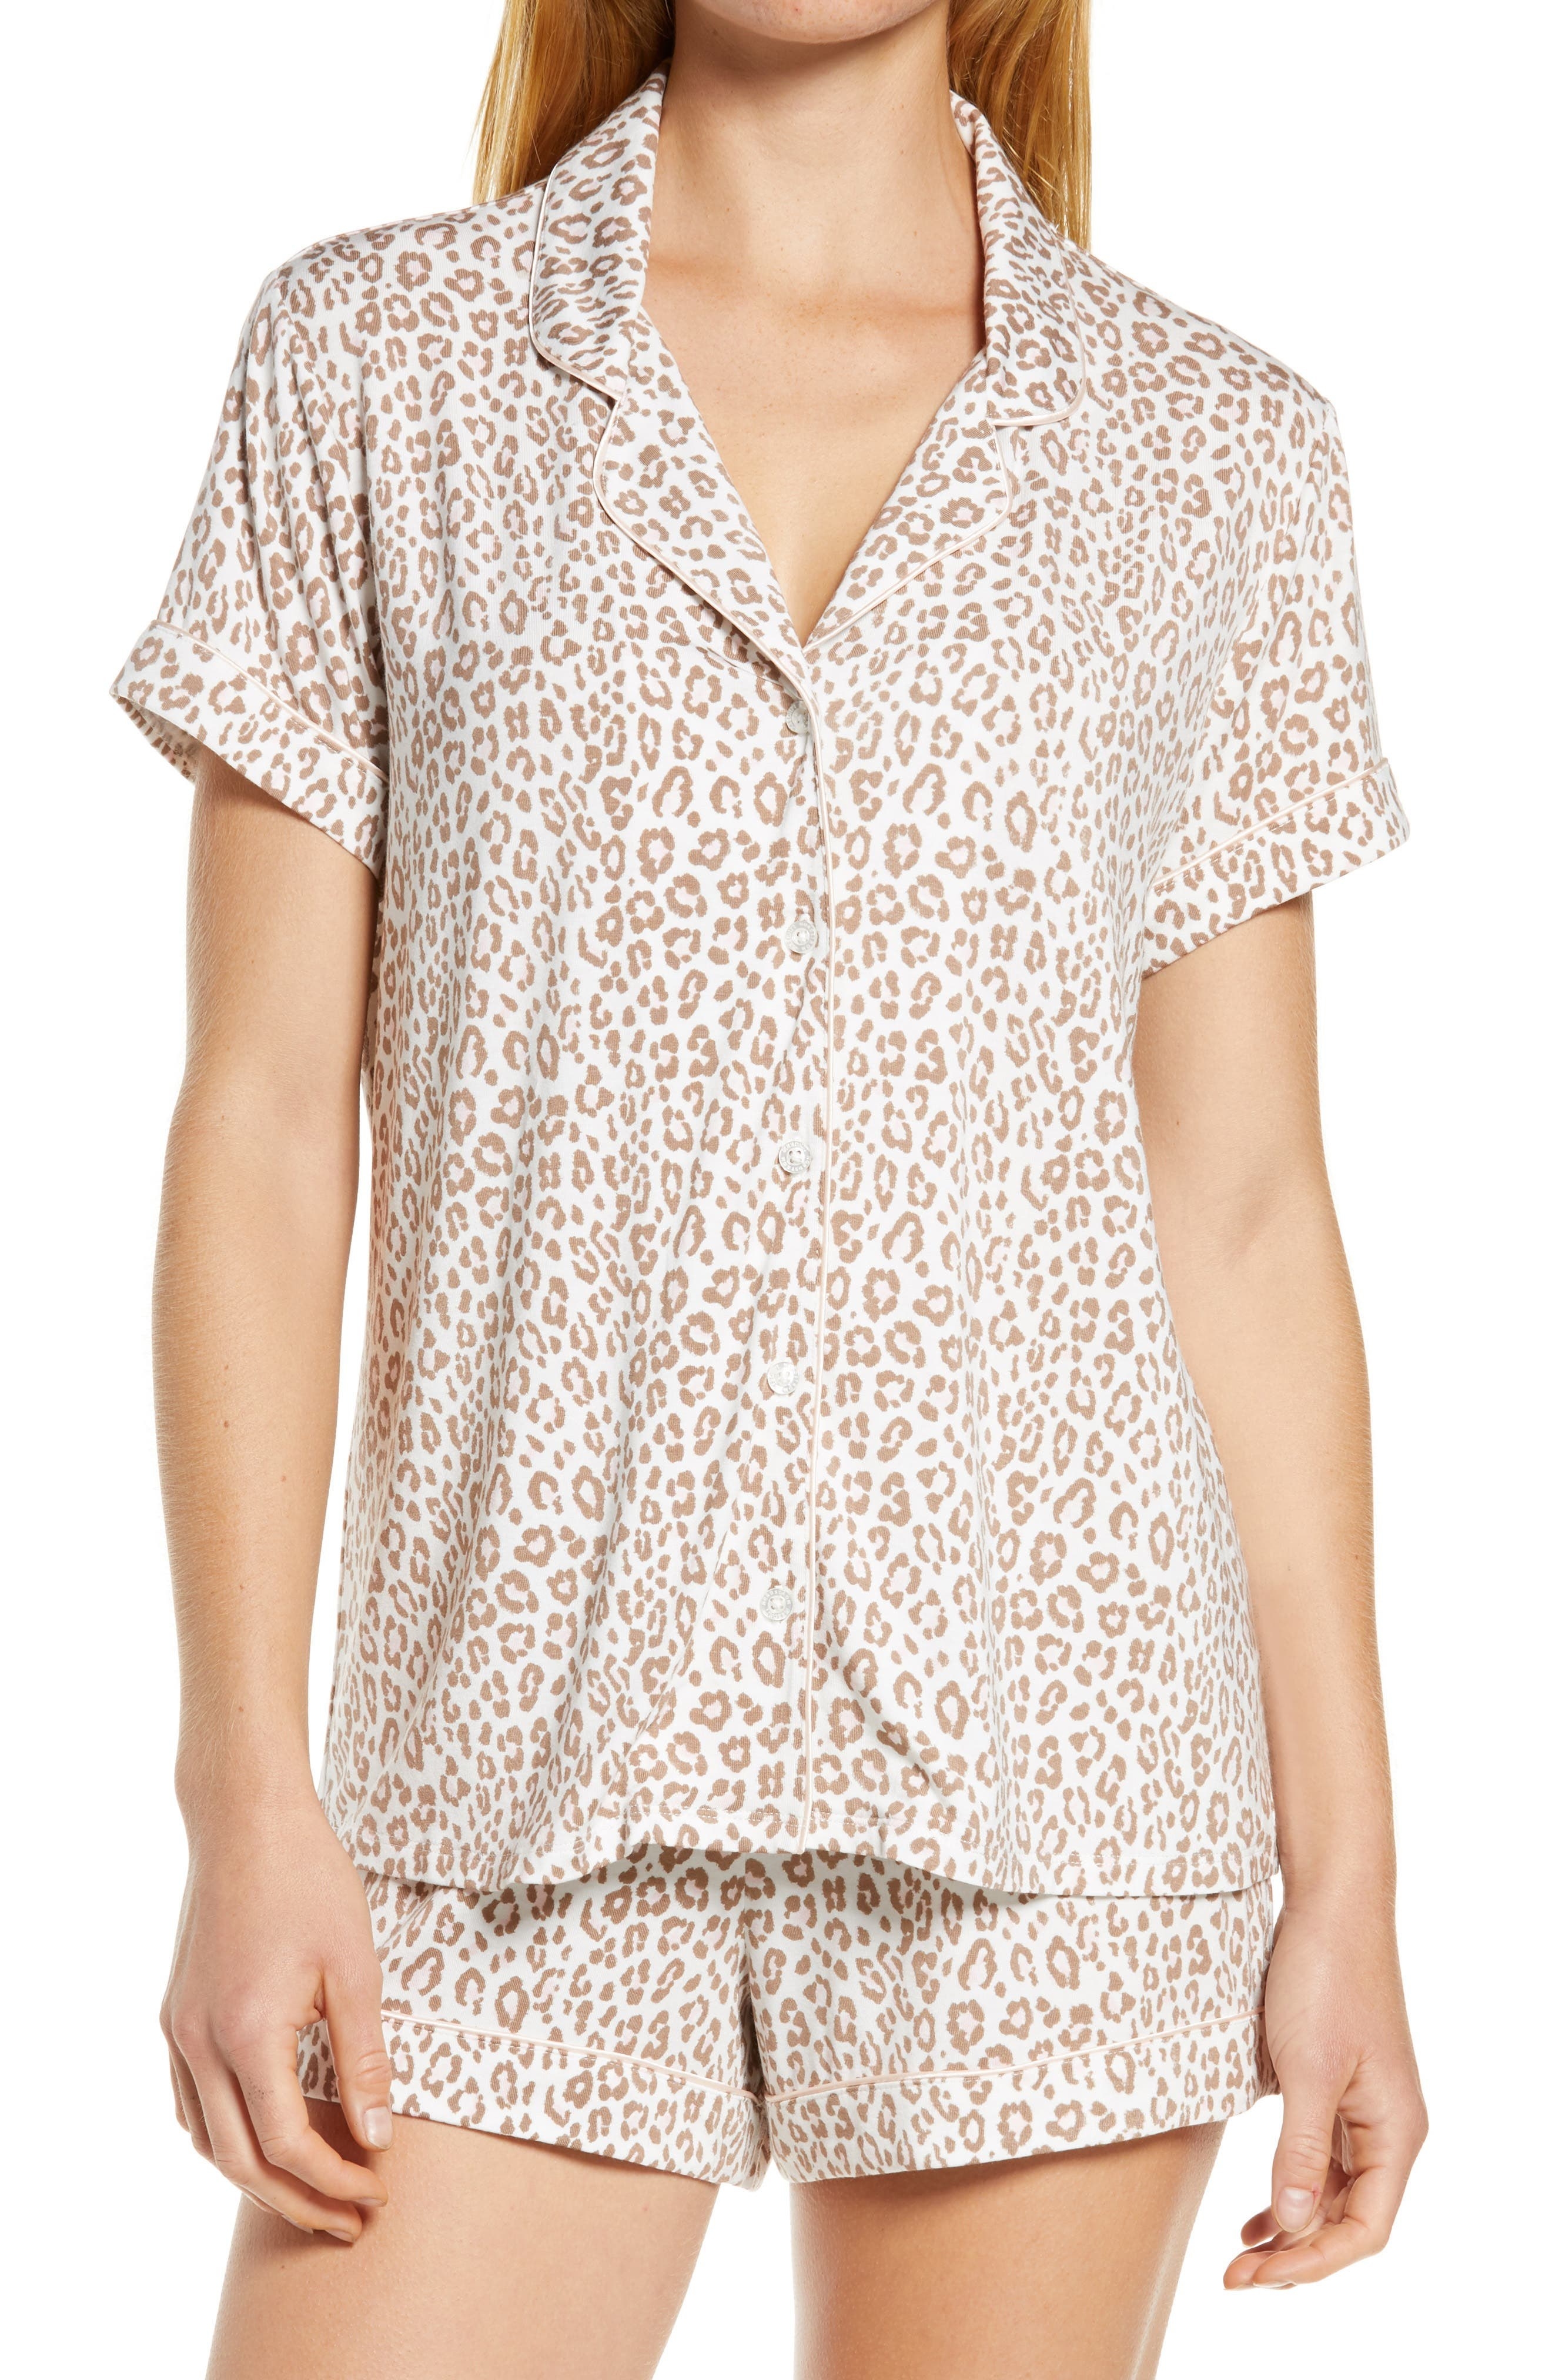 Model is wearing a white leopard print pajama short set